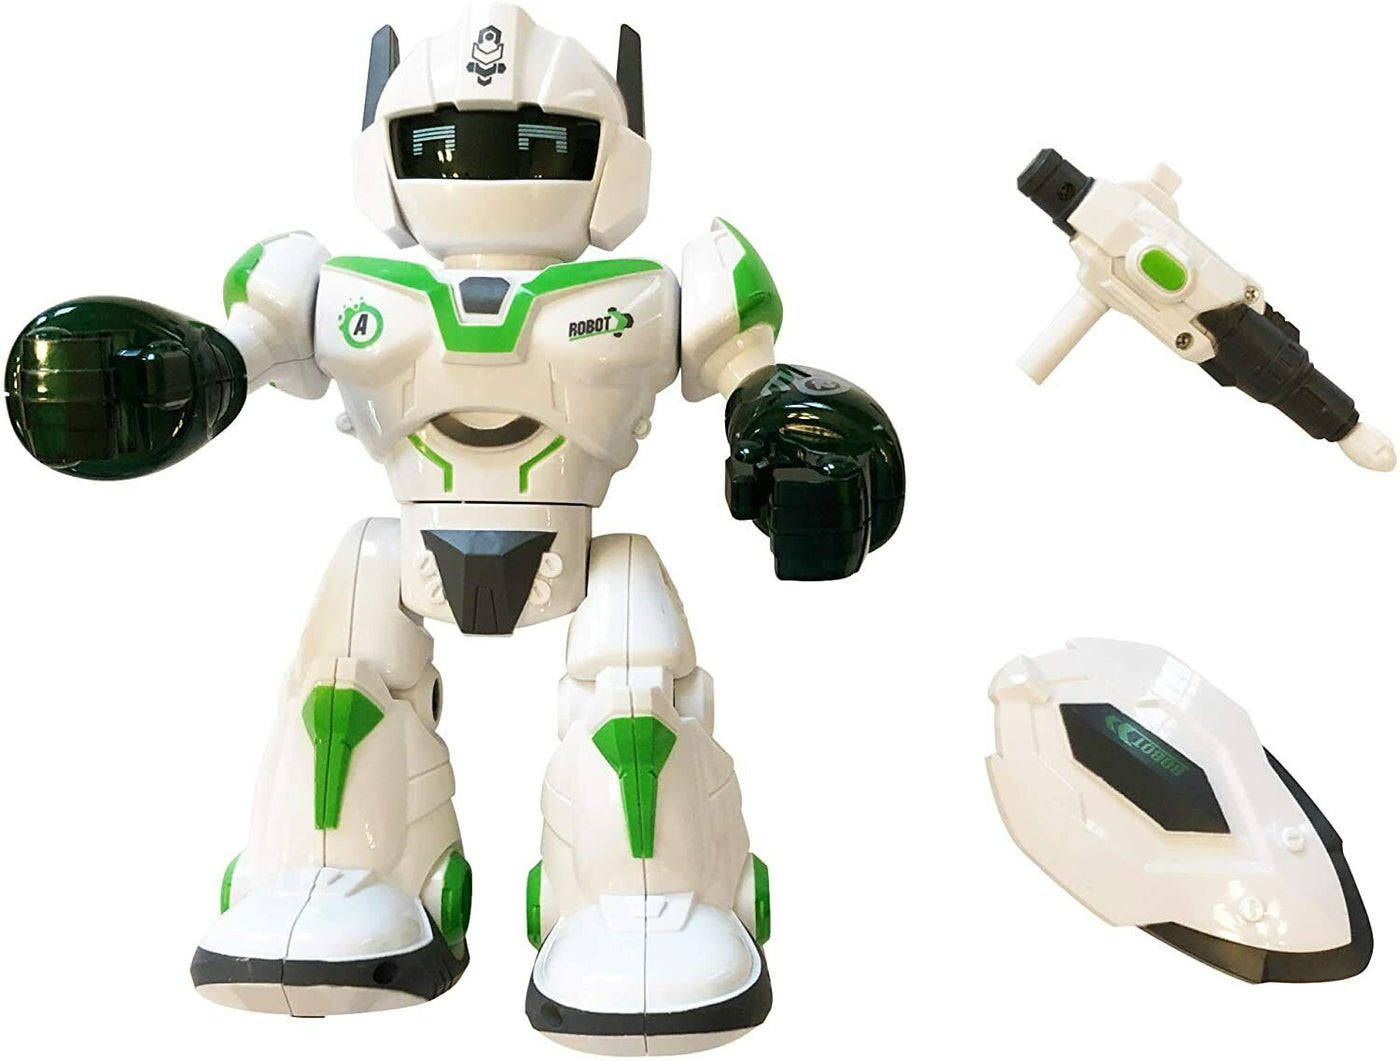 Cool Man Teaching Robot Toy For Children